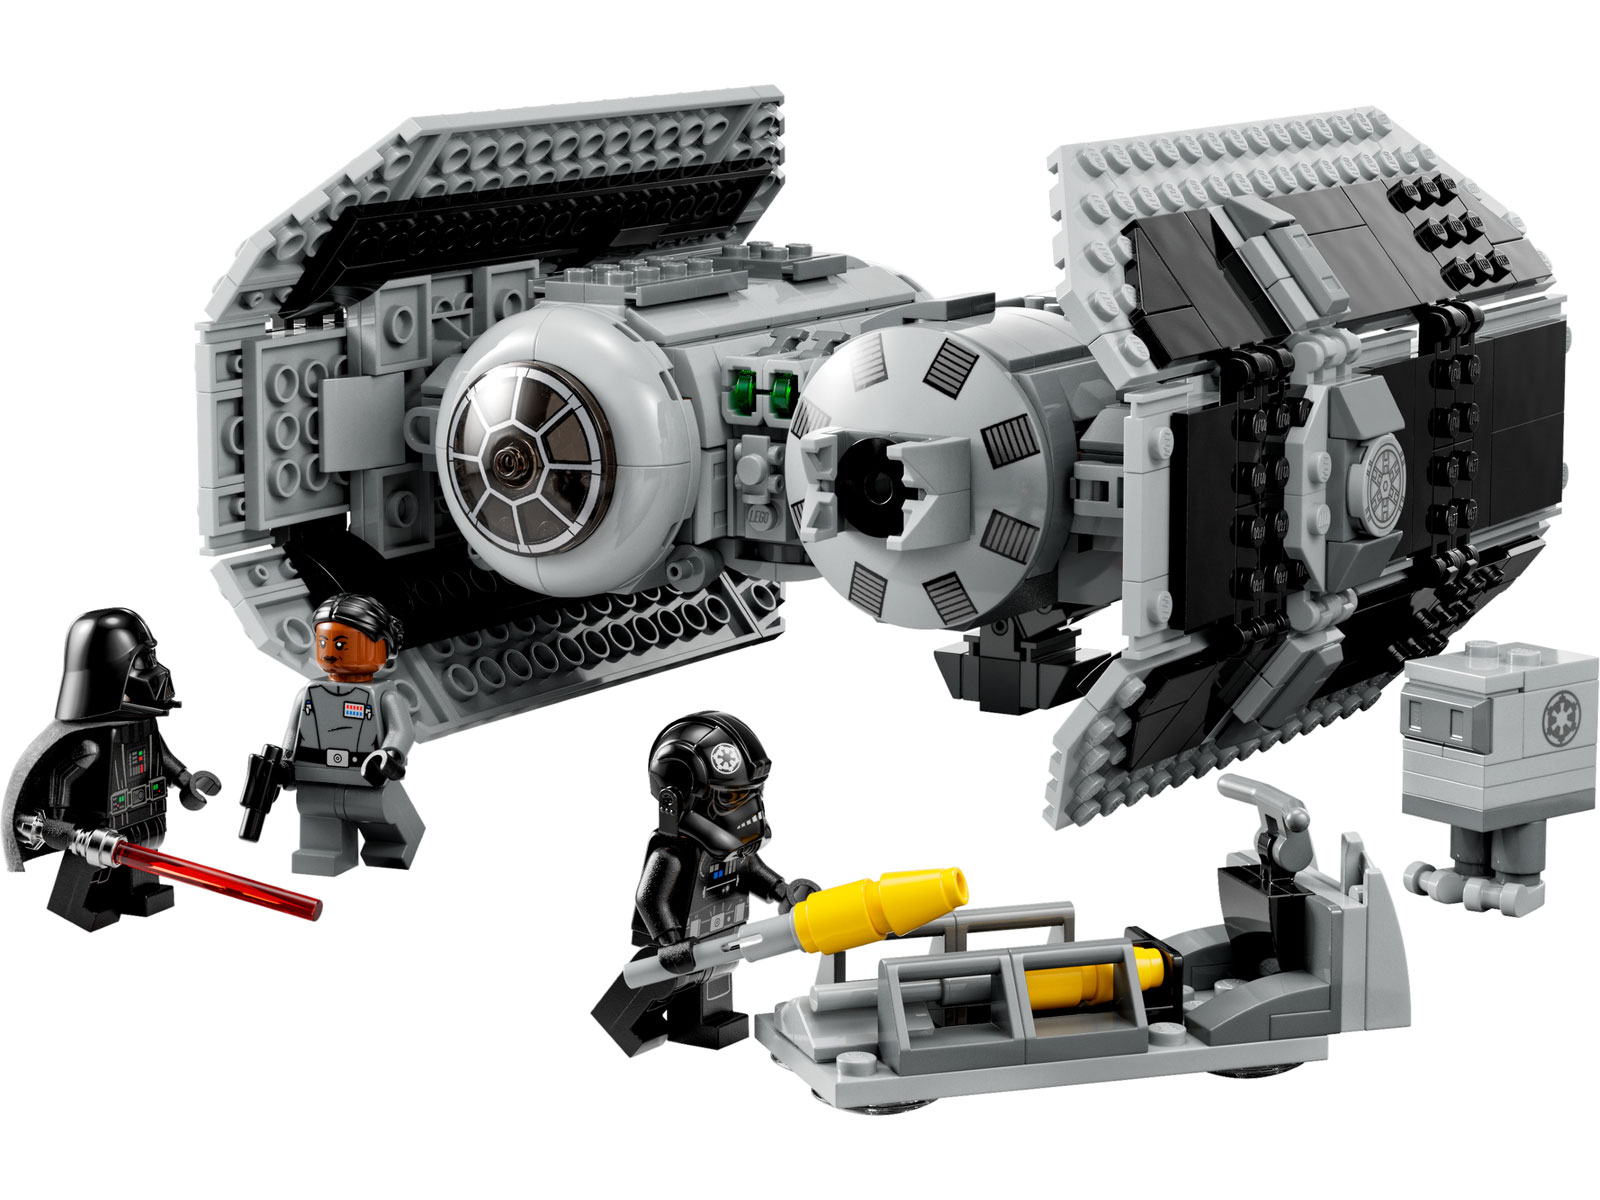 LEGO® Star Wars™ 75347 - TIE Bomber